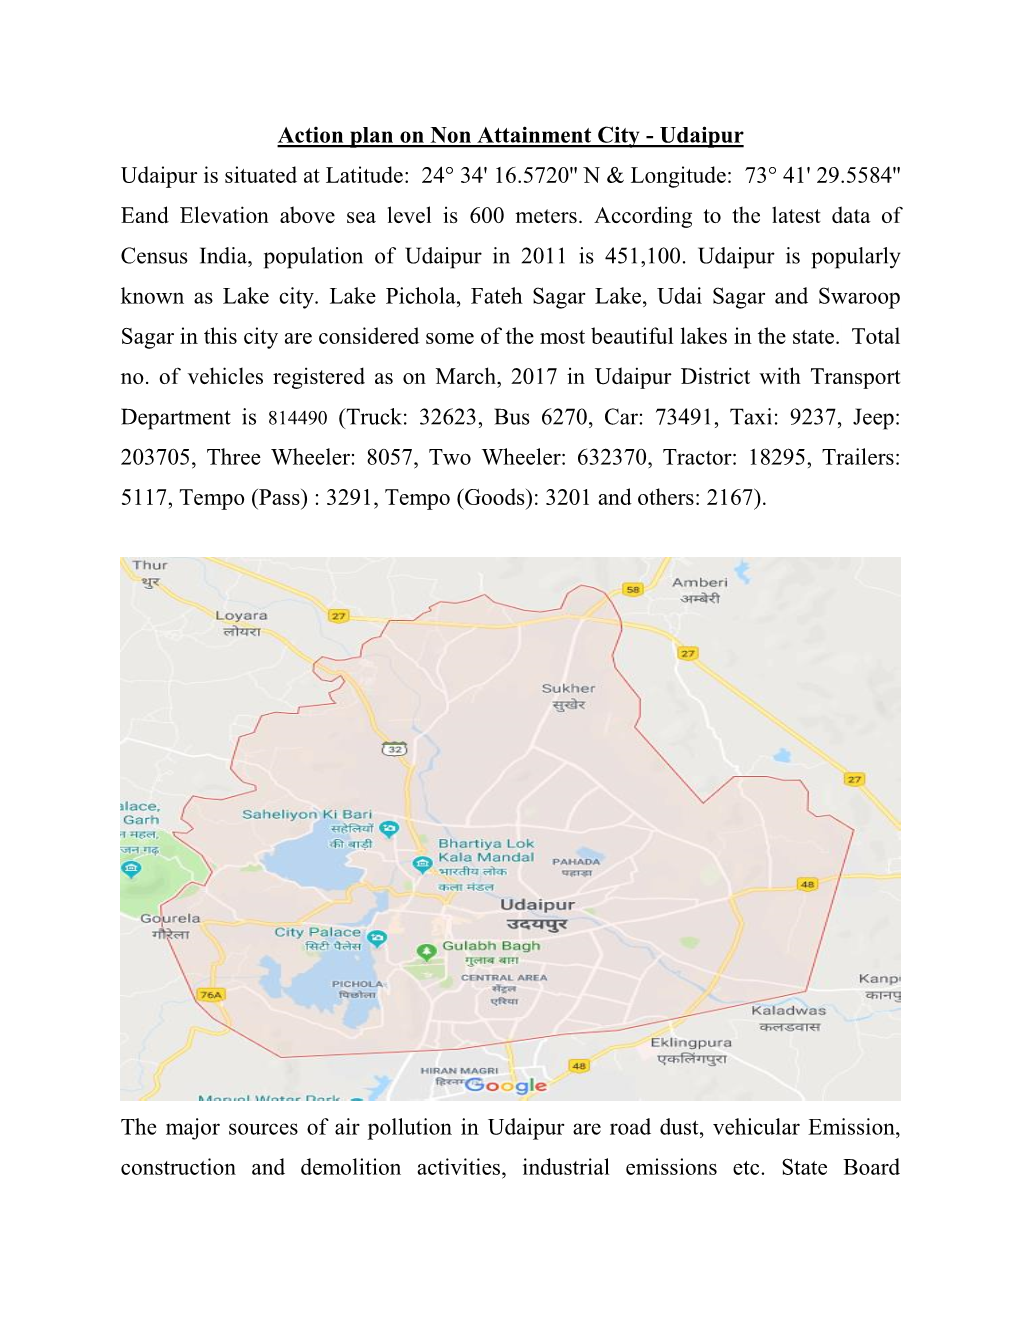 Udaipur Udaipur Is Situated at Latitude: 24° 34' 16.5720'' N & Longitude: 73° 41' 29.5584'' Eand Elevation Above Sea Level Is 600 Meters